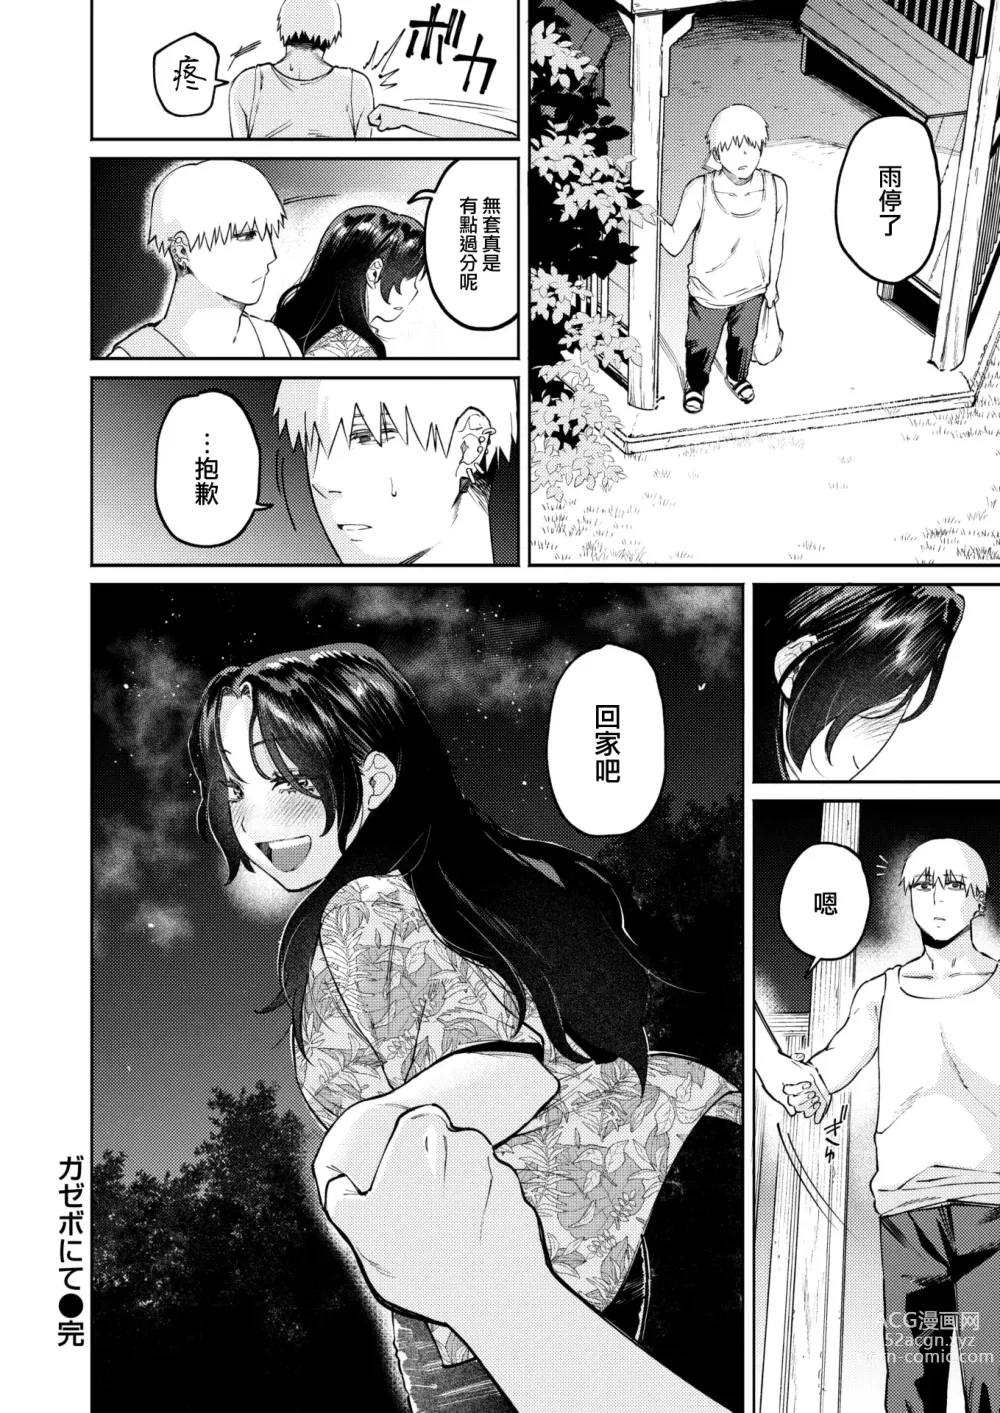 Page 19 of manga Gazebo nite - Under a Gazebo